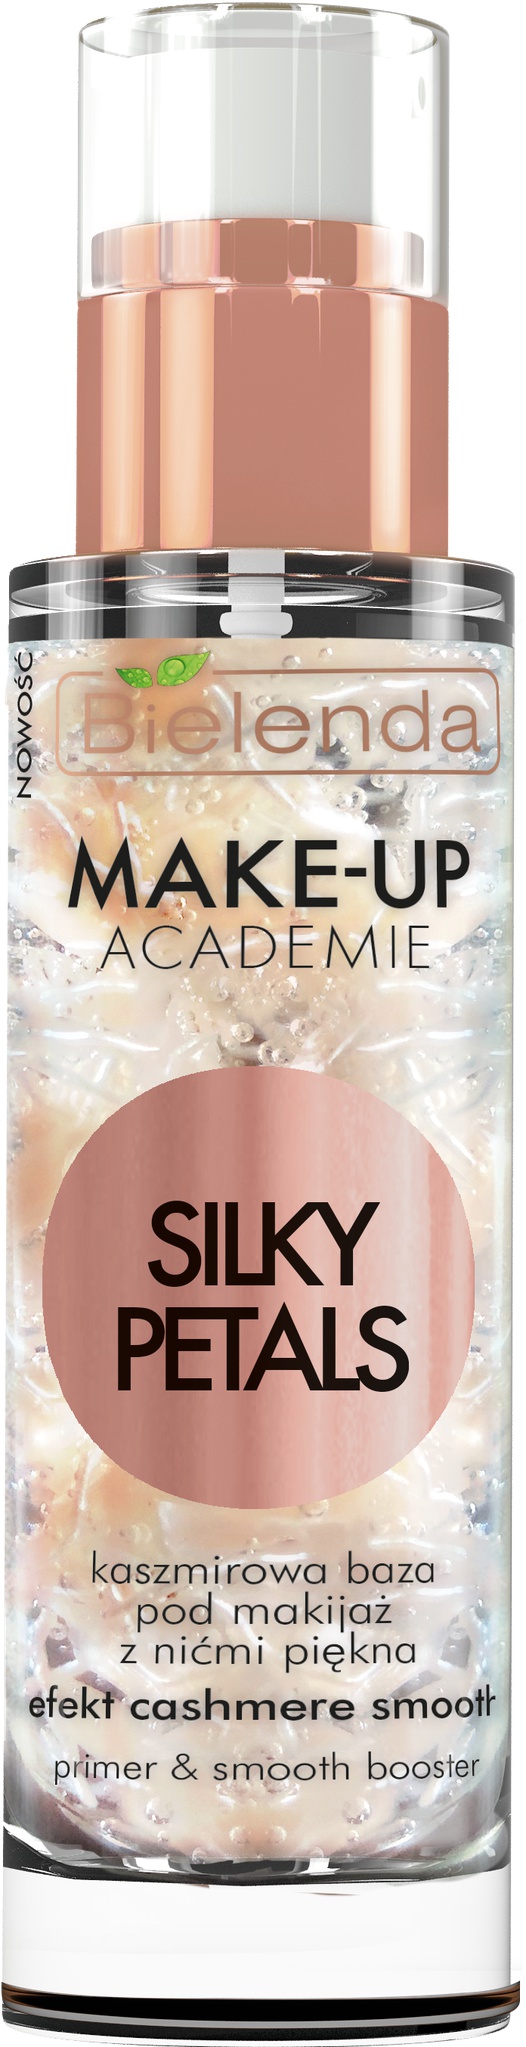 Bielenda Make-Up Academie Silky Petals Primer